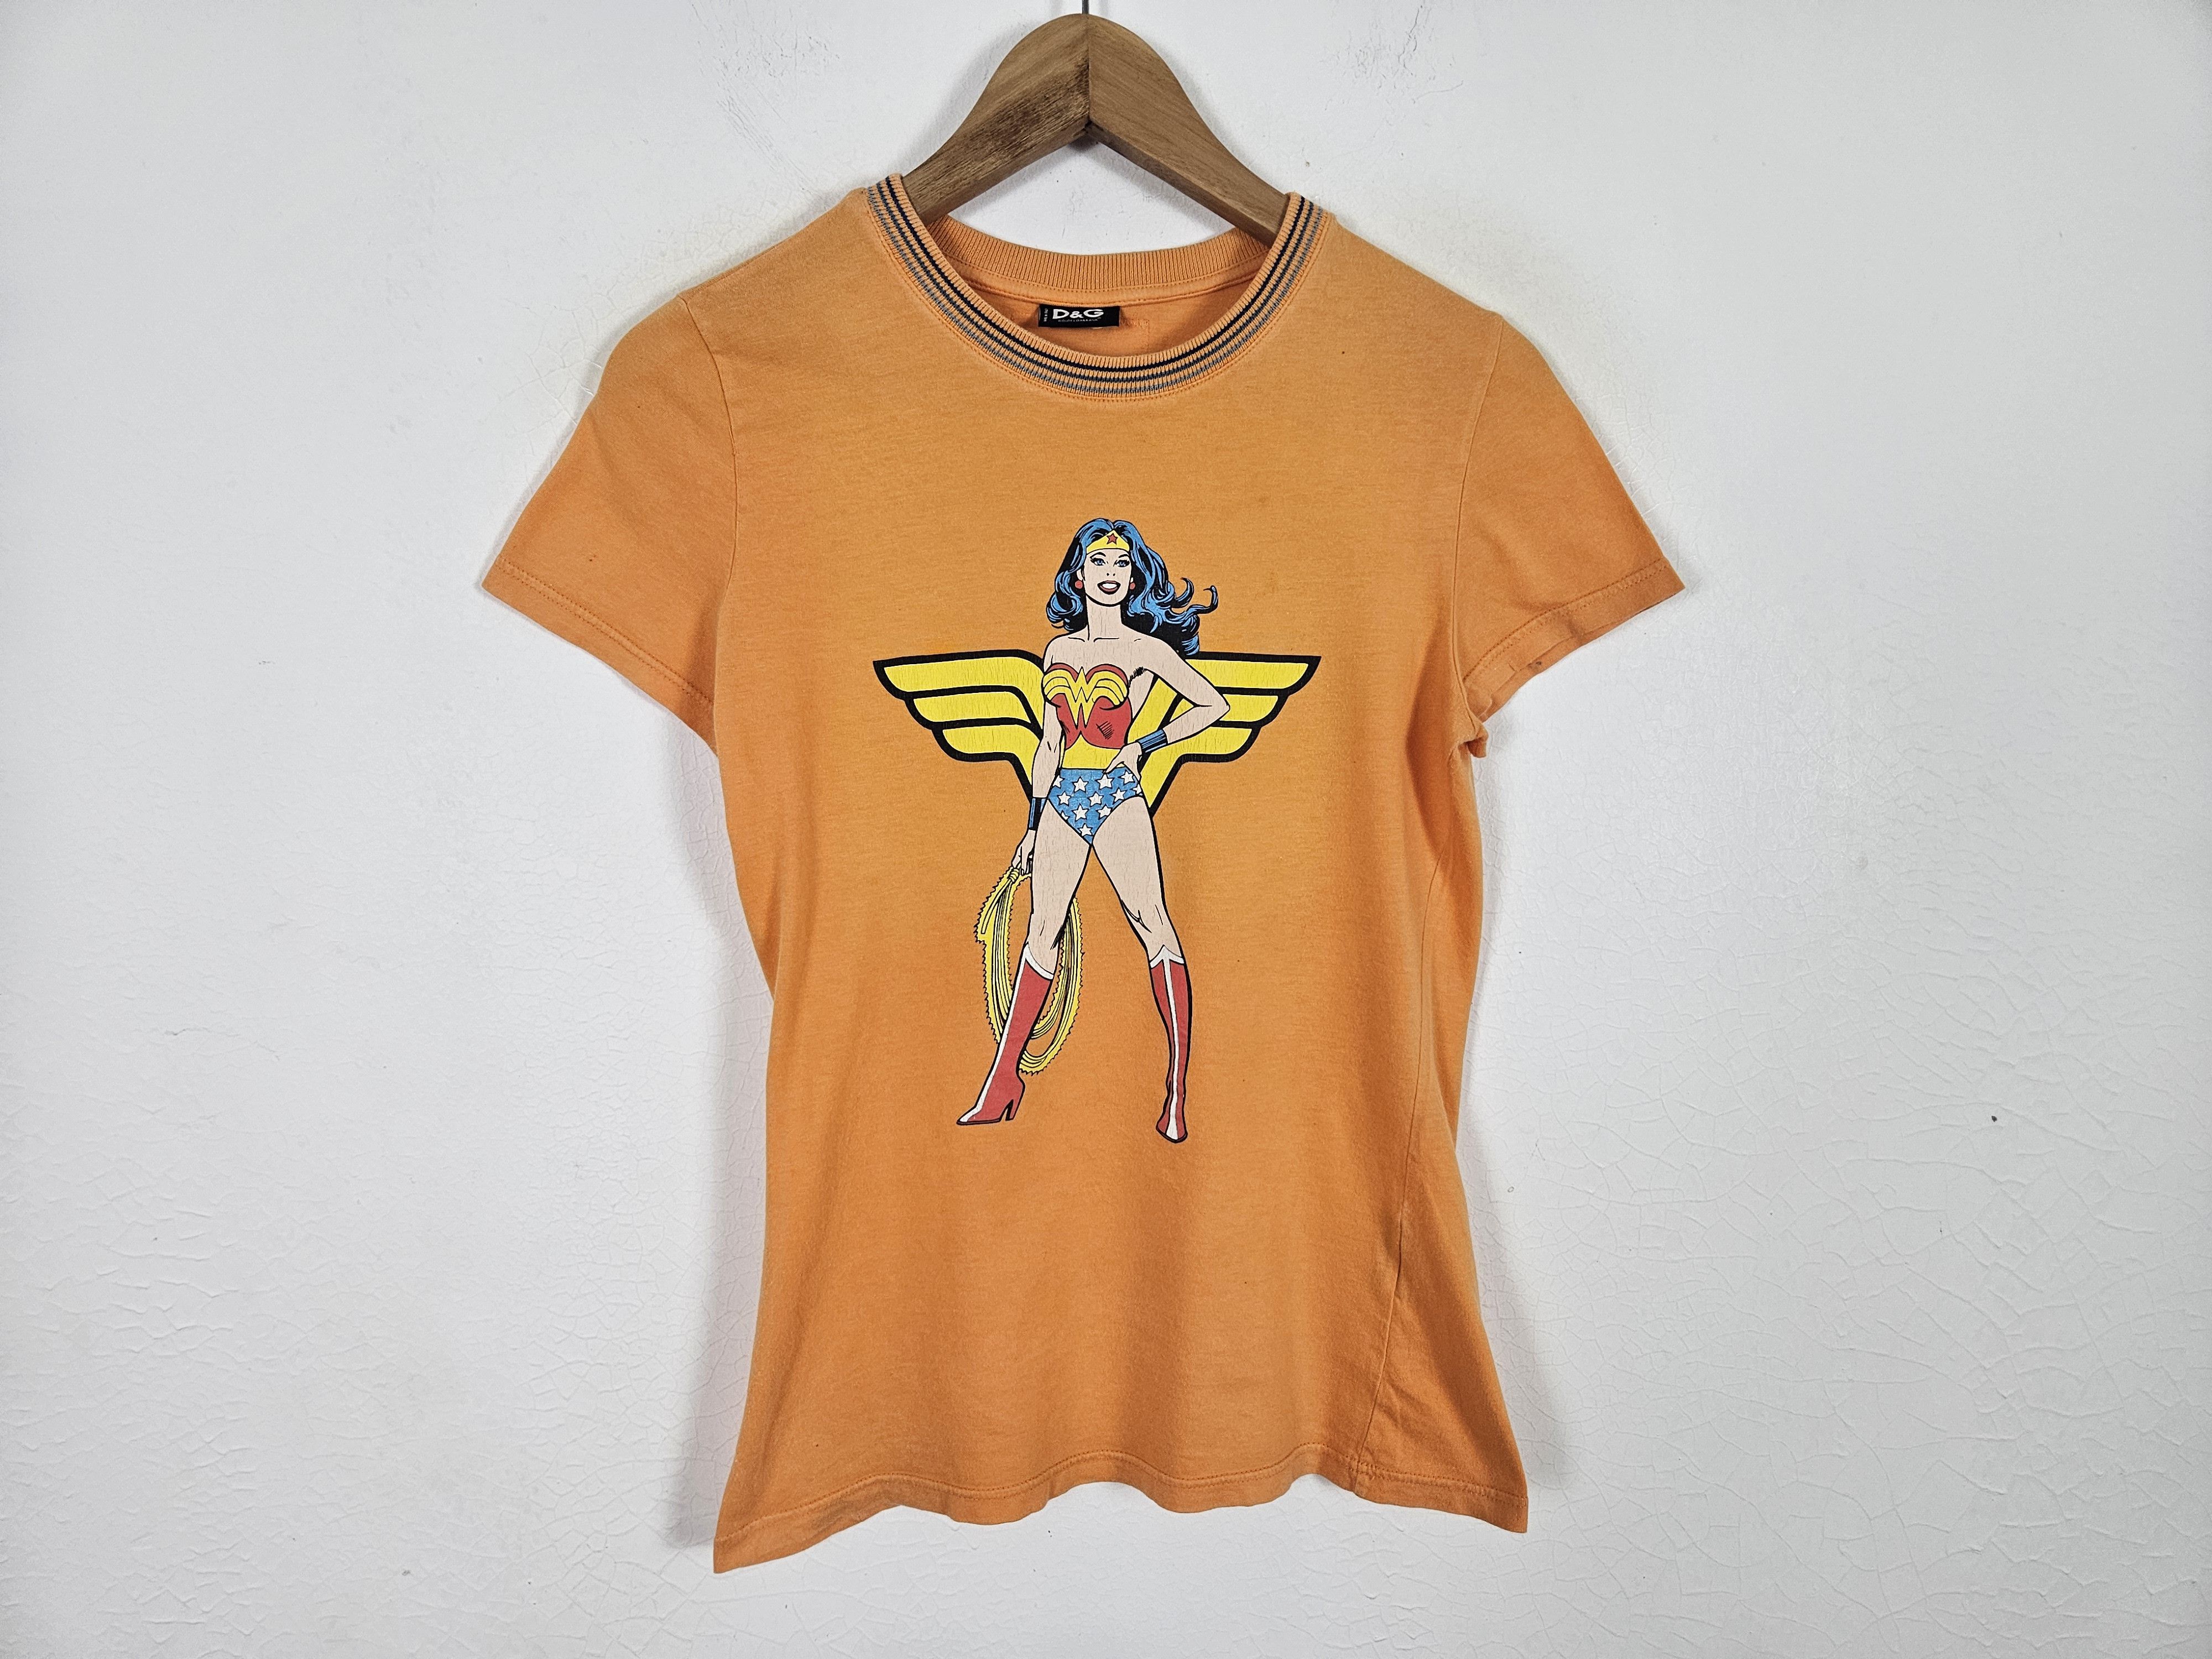 Dolce & Gabbana Wonder Woman DC Comics shirt - 2